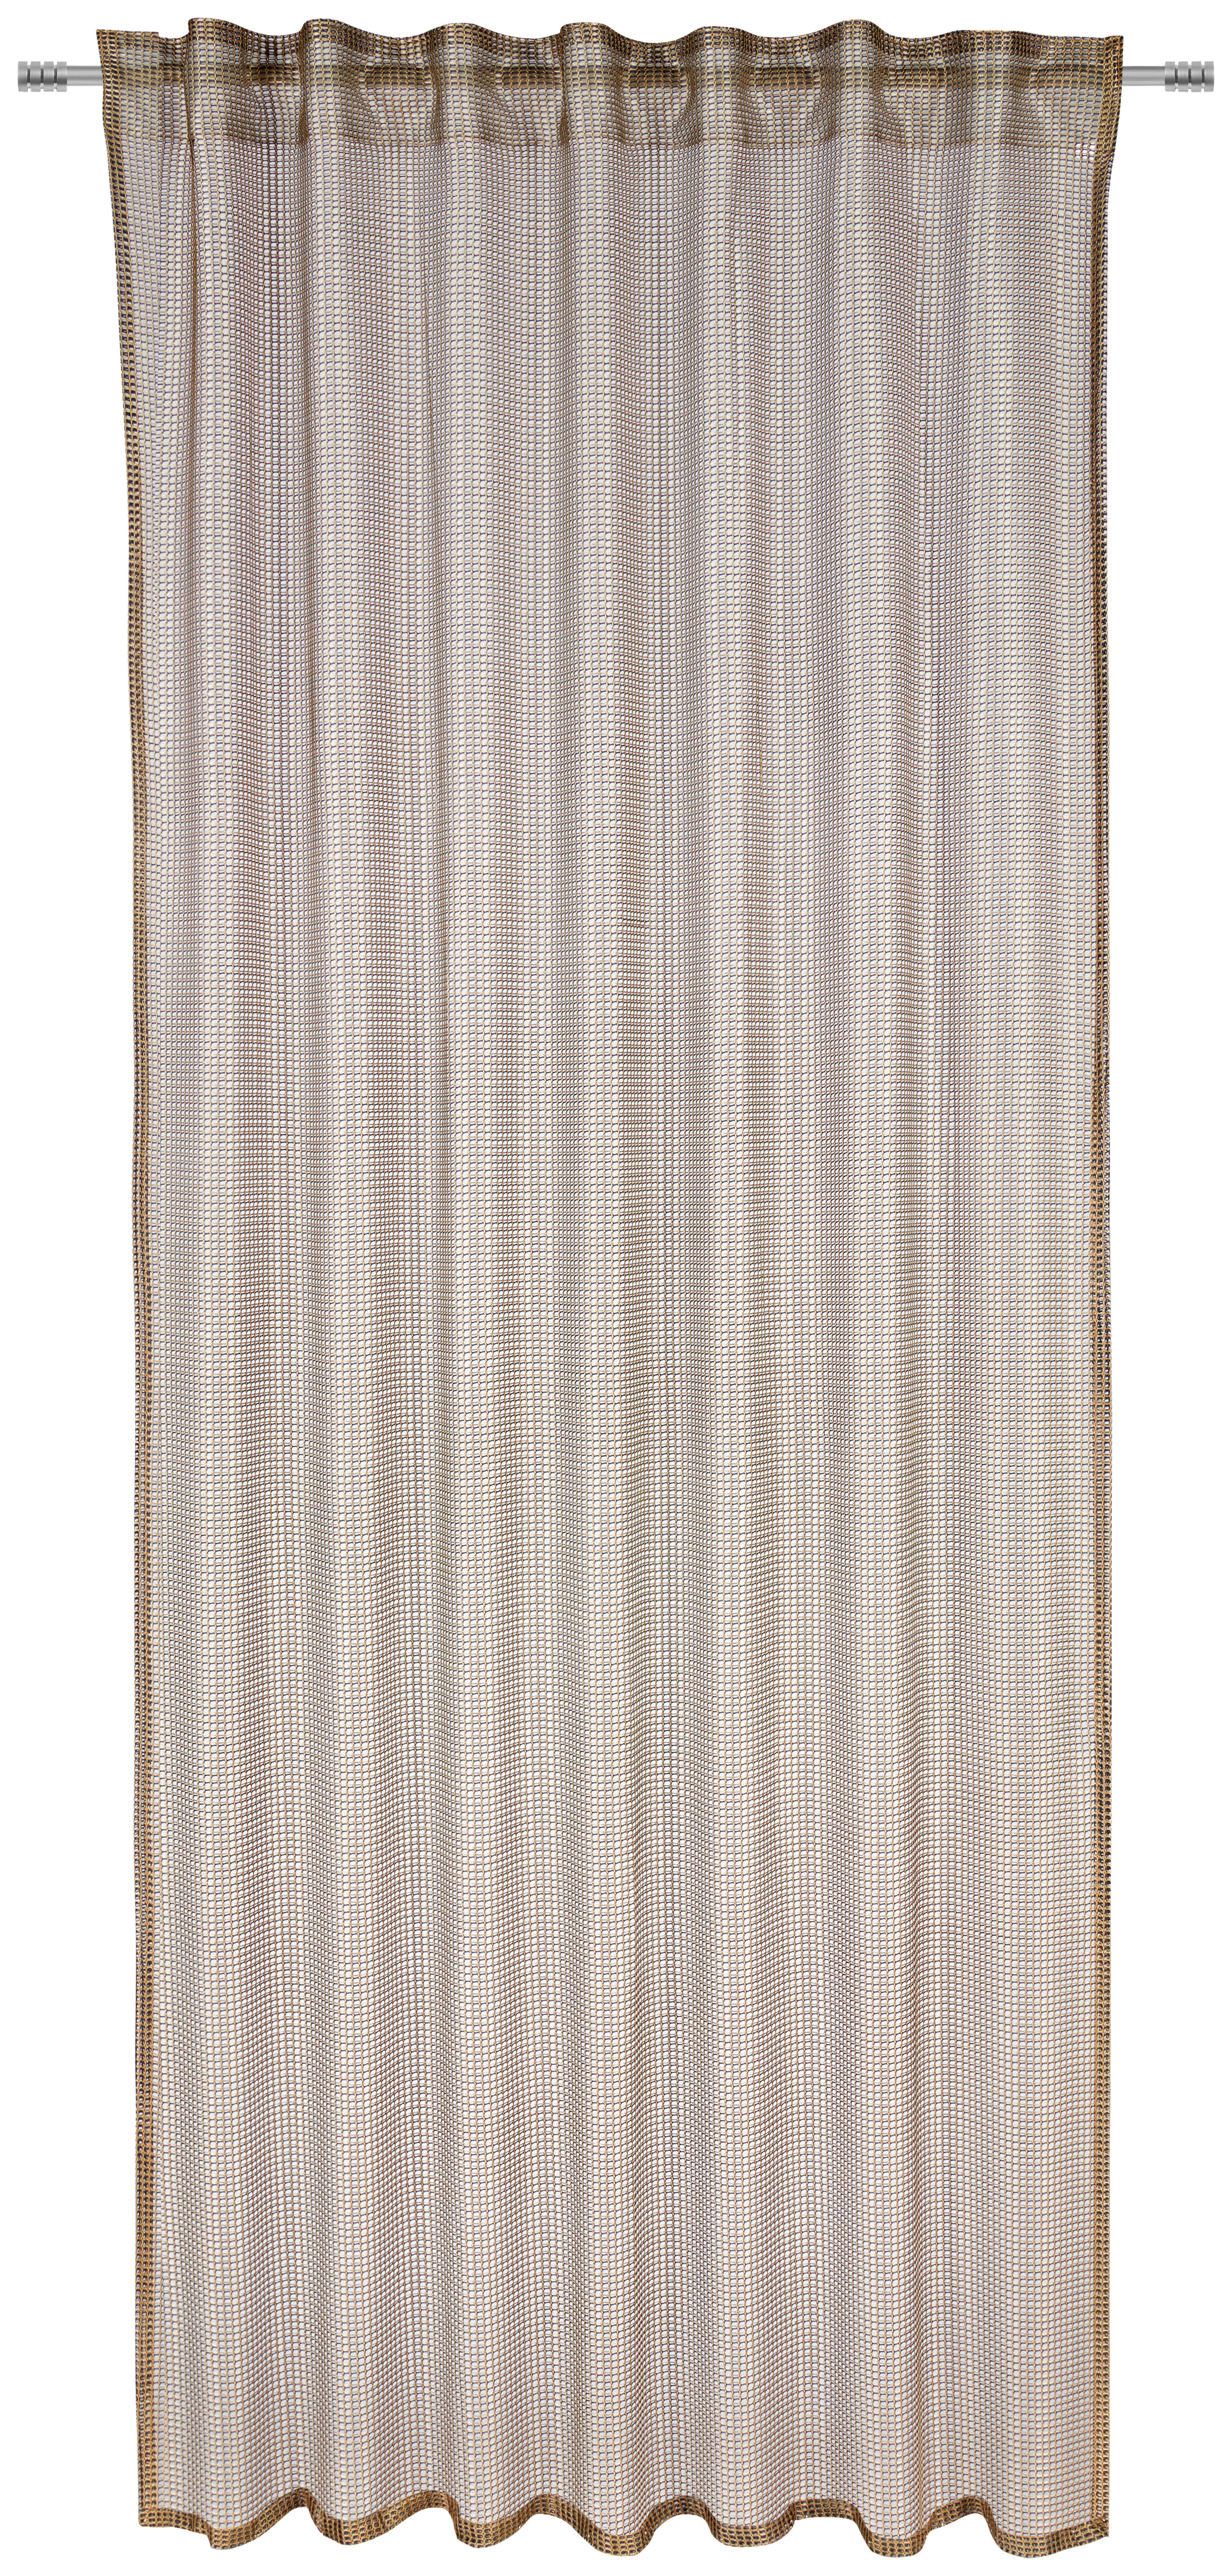 FERTIGVORHANG Lumos transparent 140/245 cm   - Goldfarben, Design, Textil (140/245cm) - Ambiente